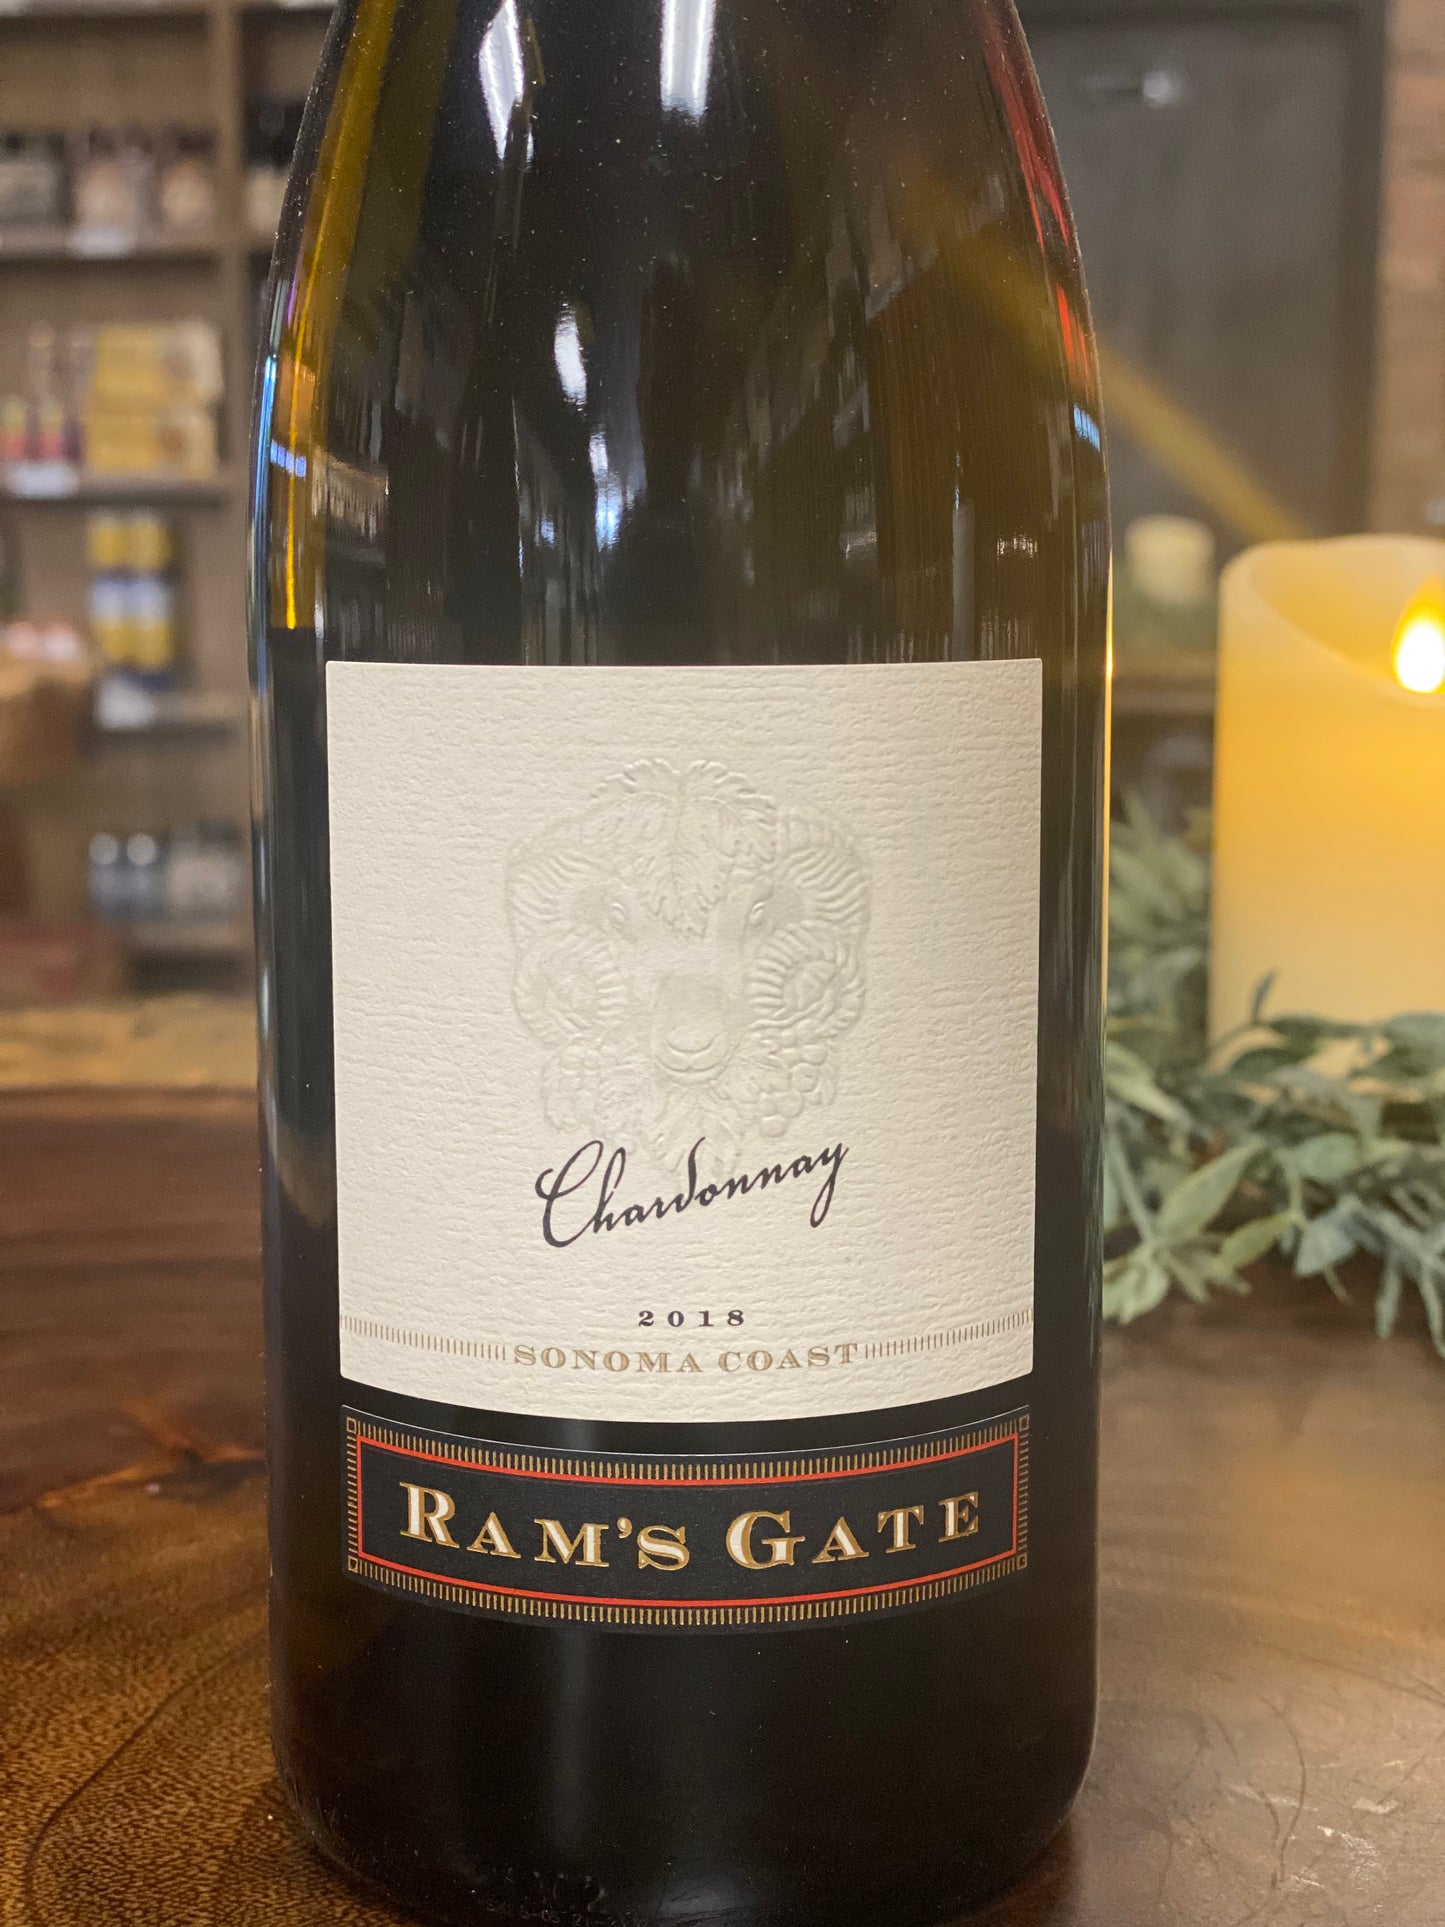 Ram’s Gate Chardonnay “Sonoma Coast”